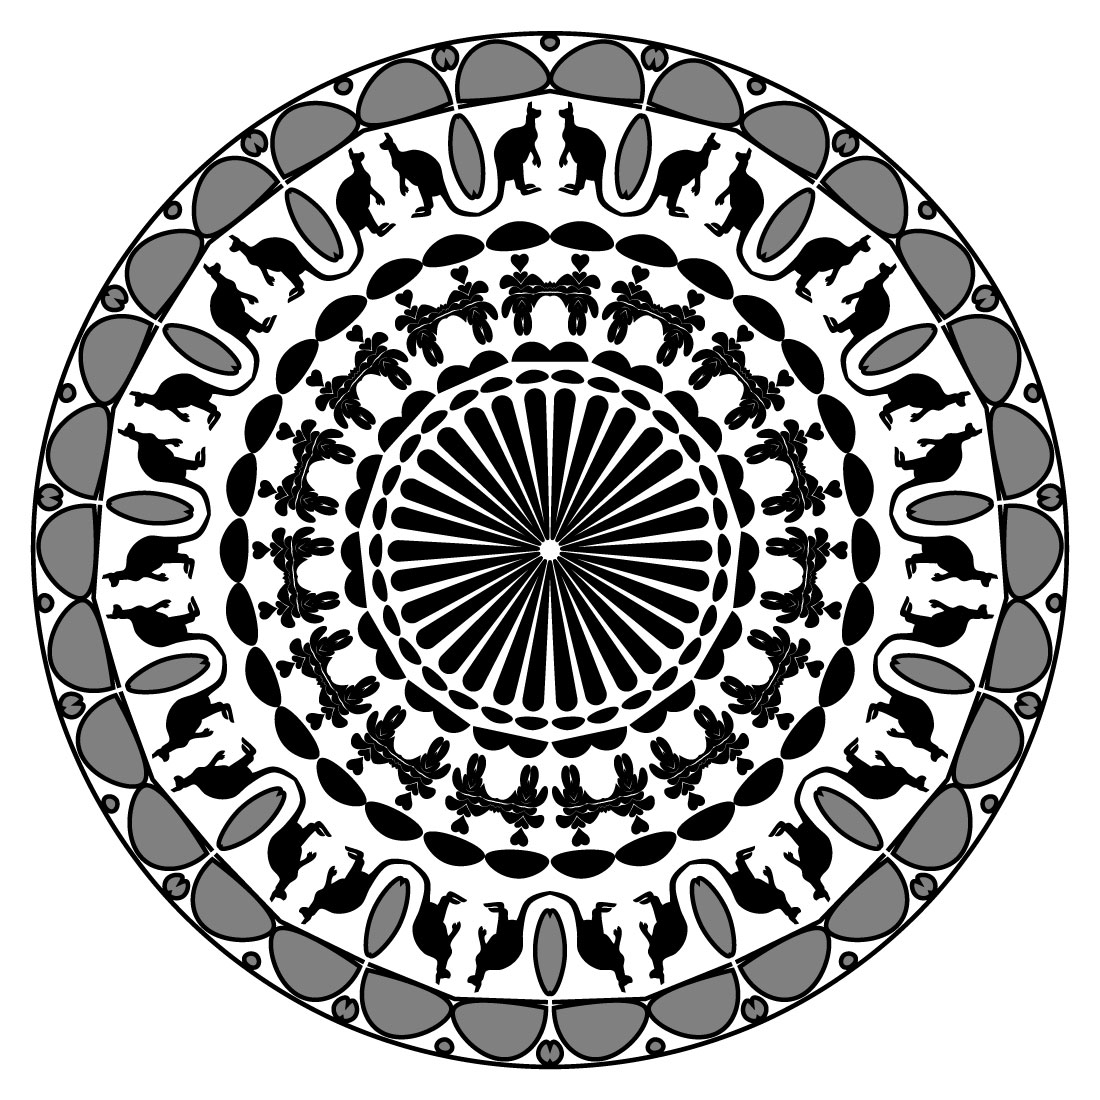 Mandala Art with Kangaroo in Black and White cover image.